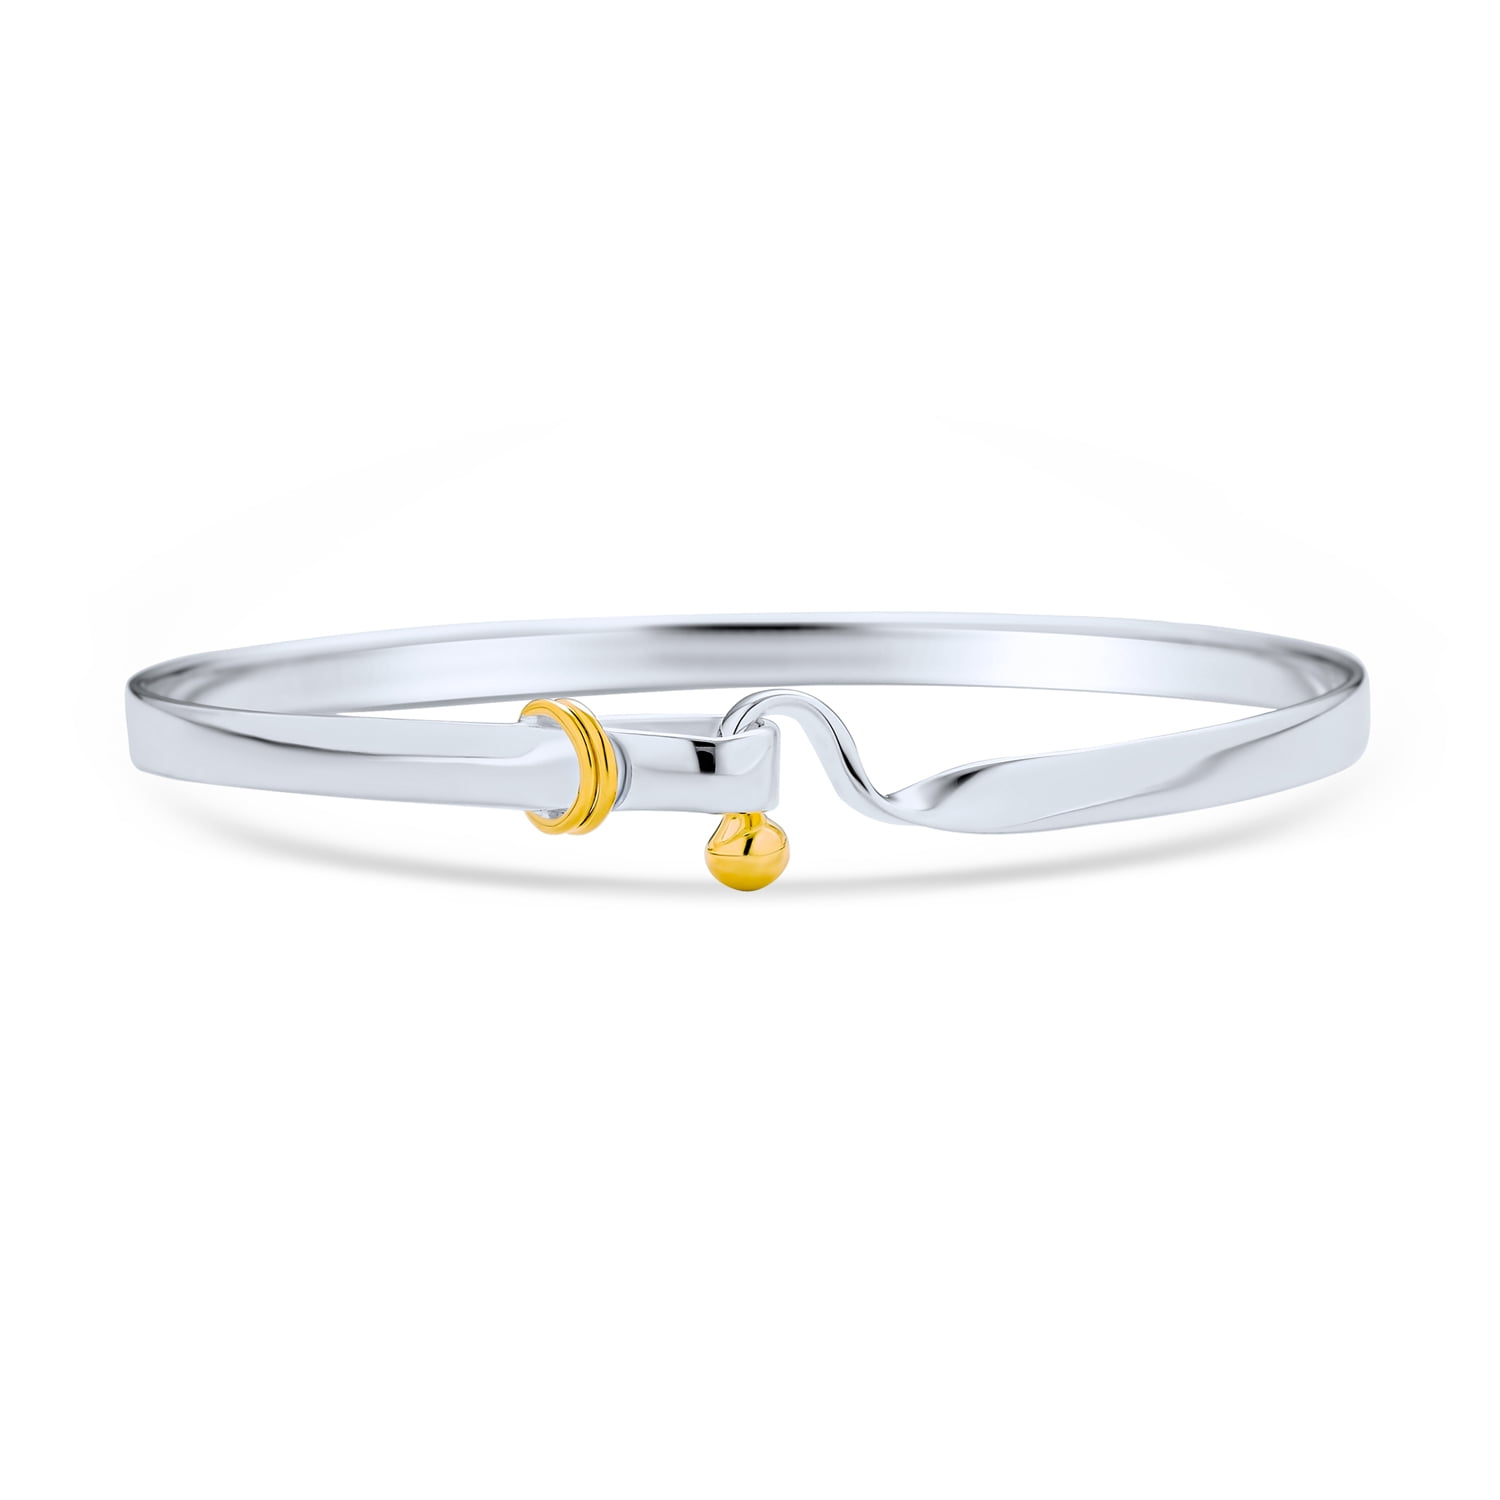 DiamondJewelryNY Eye Hook Bangle Bracelet with a Plain Disc Charm. 